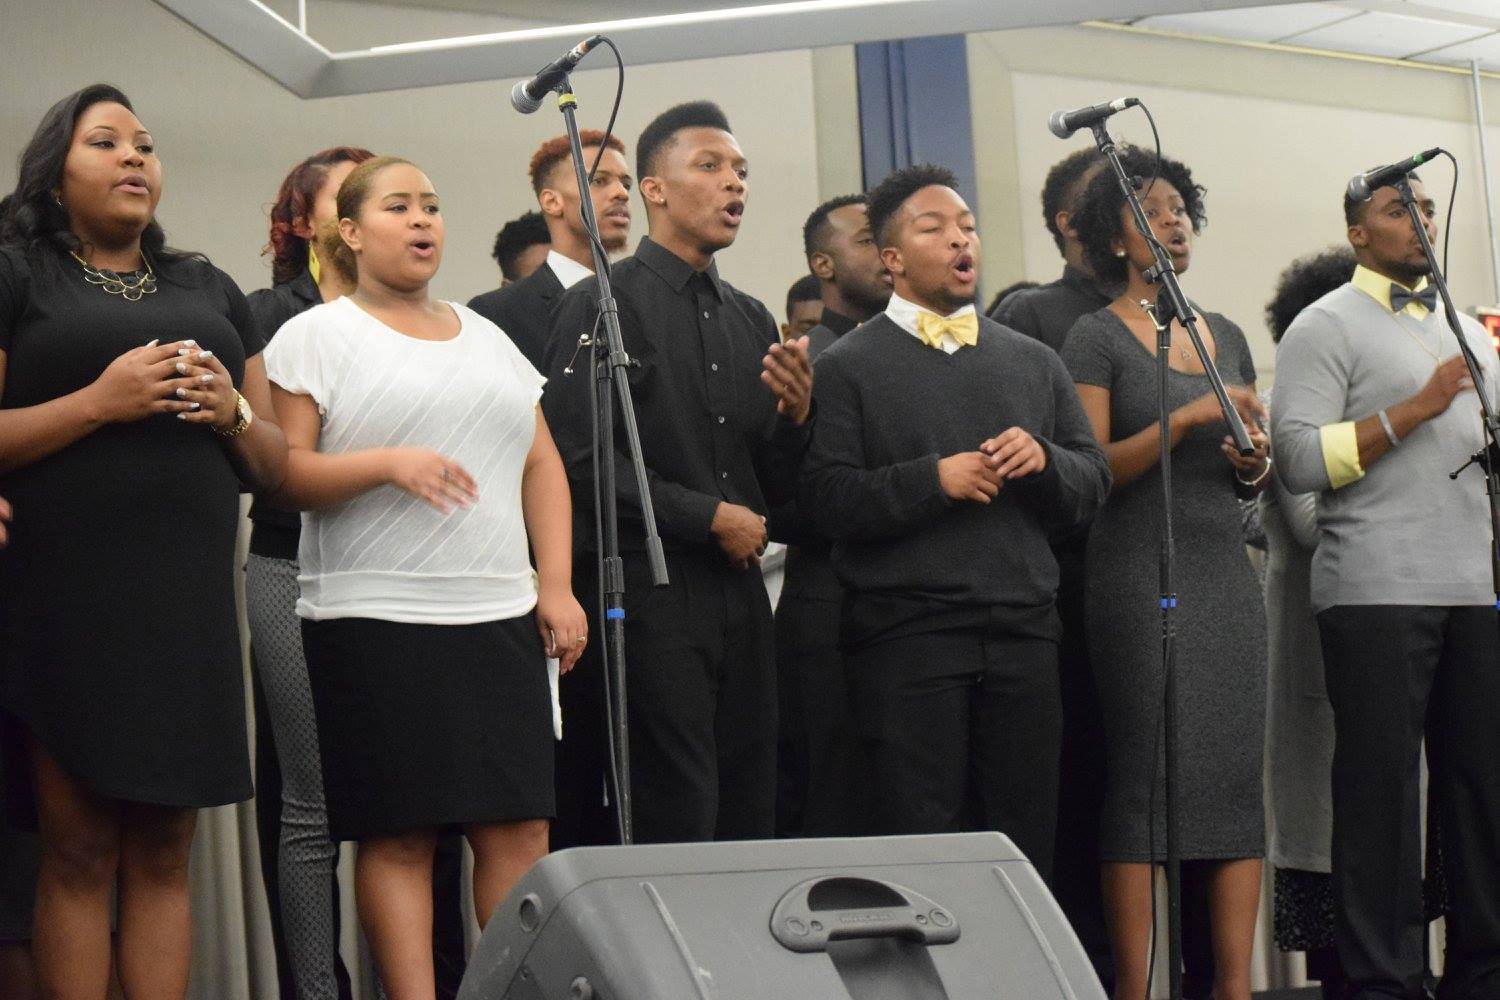 Ebony Impact Gospel Choir